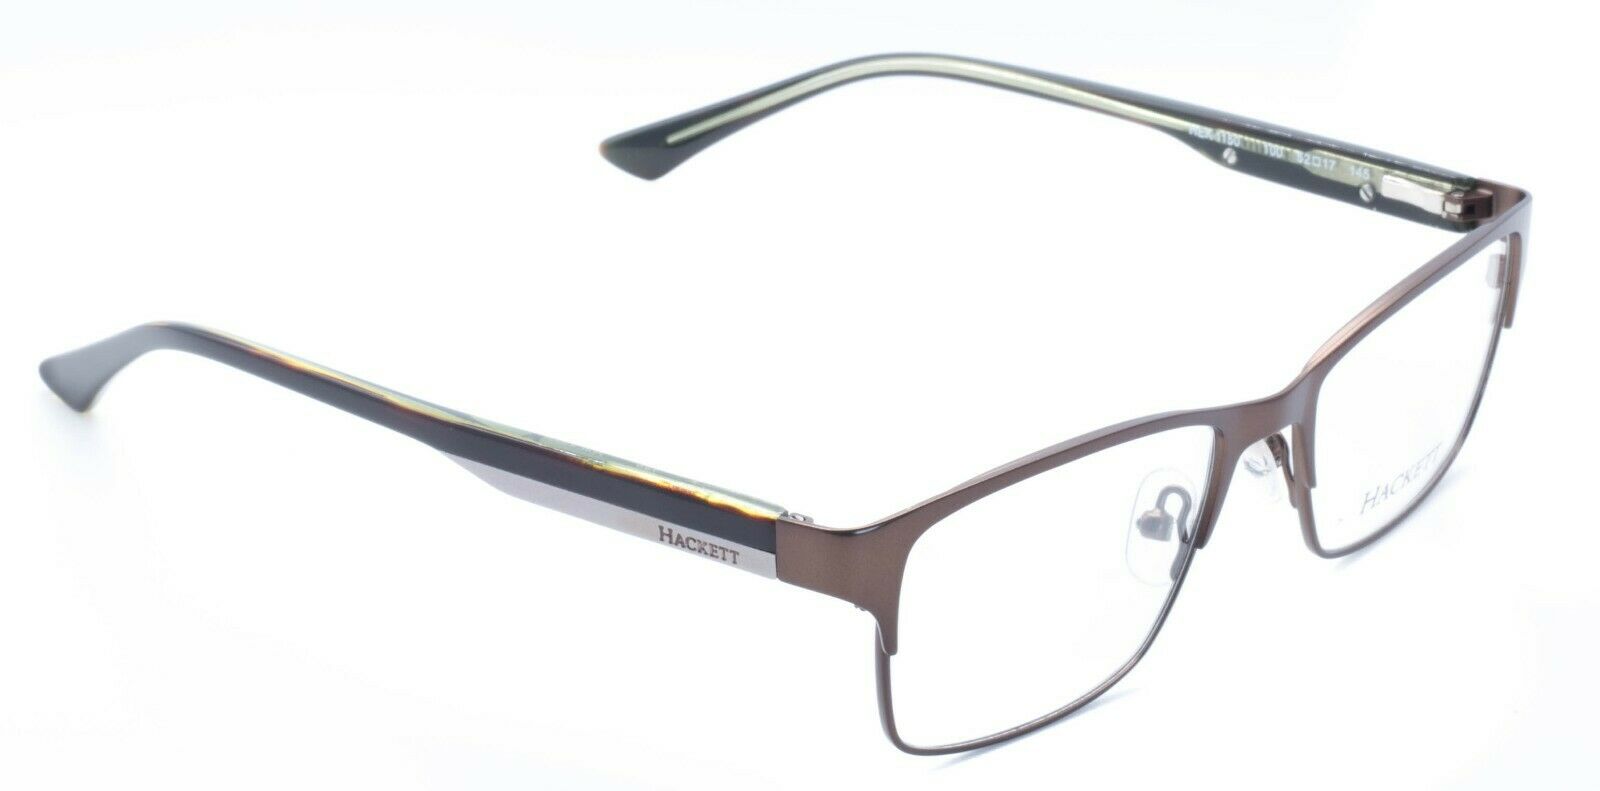 HACKETT London HEK 1150 521 52mm Eyewear FRAMES RX Optical Glasses Eyeglasses